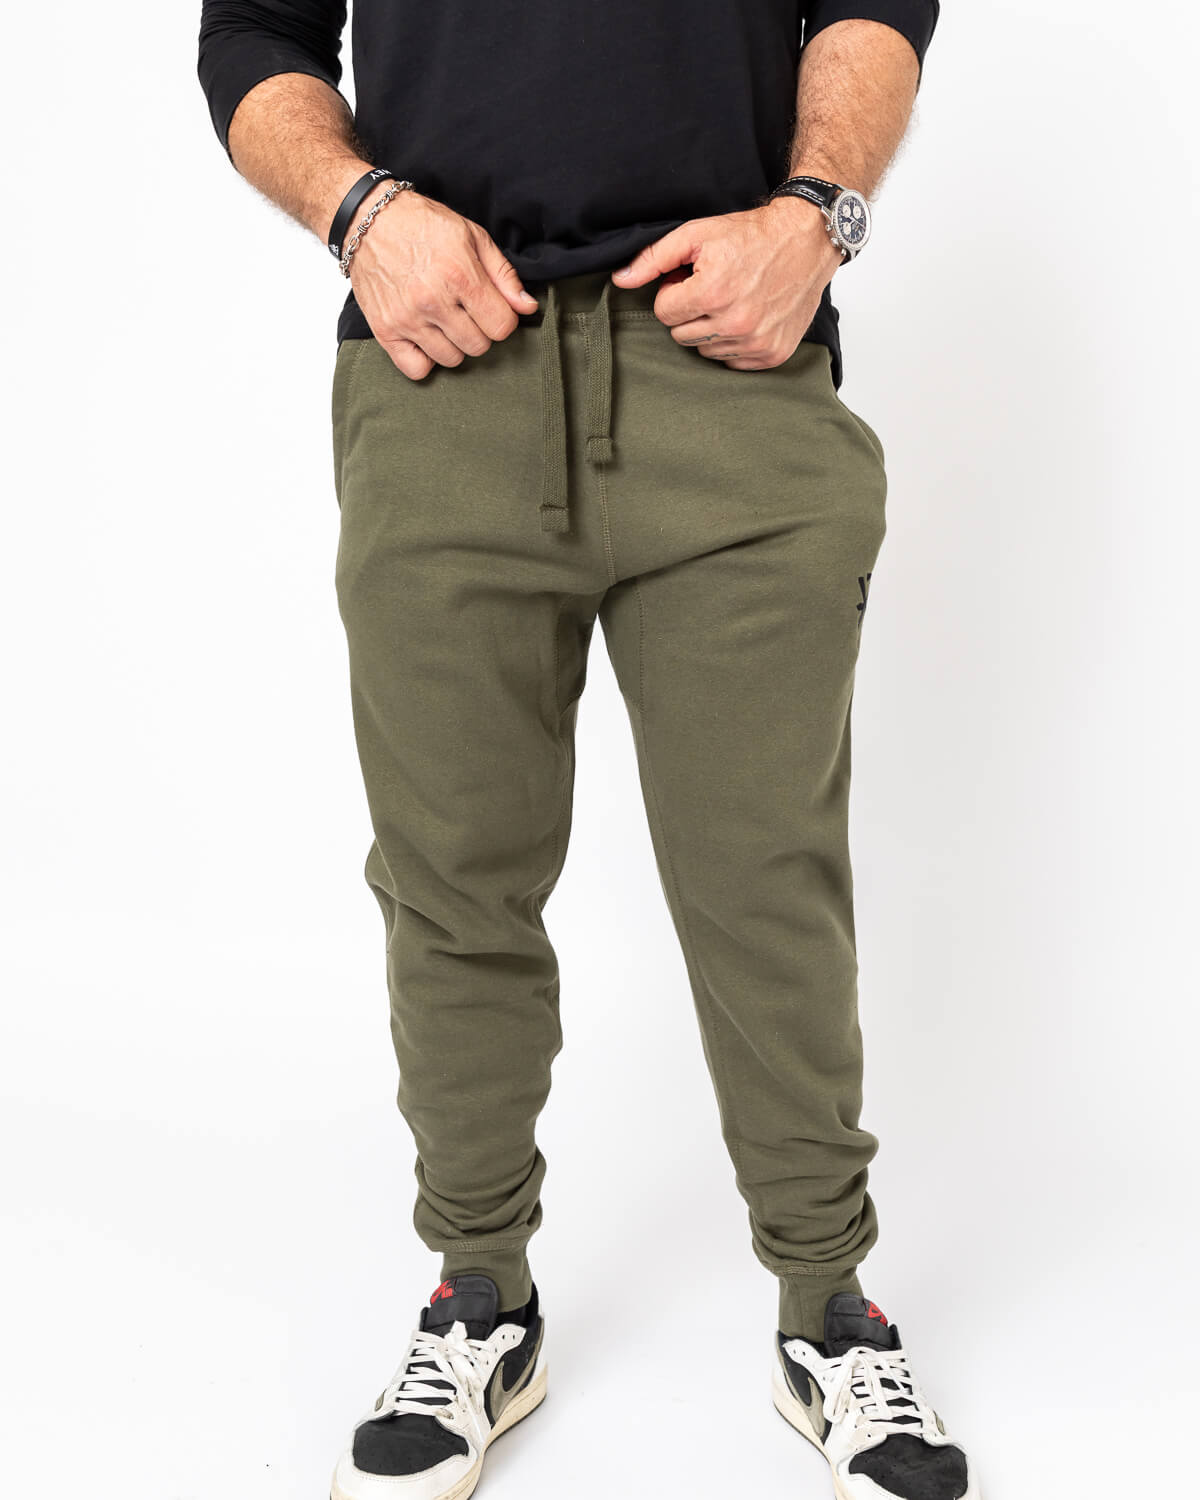 WATT Logo Fleece Pants-Military Green